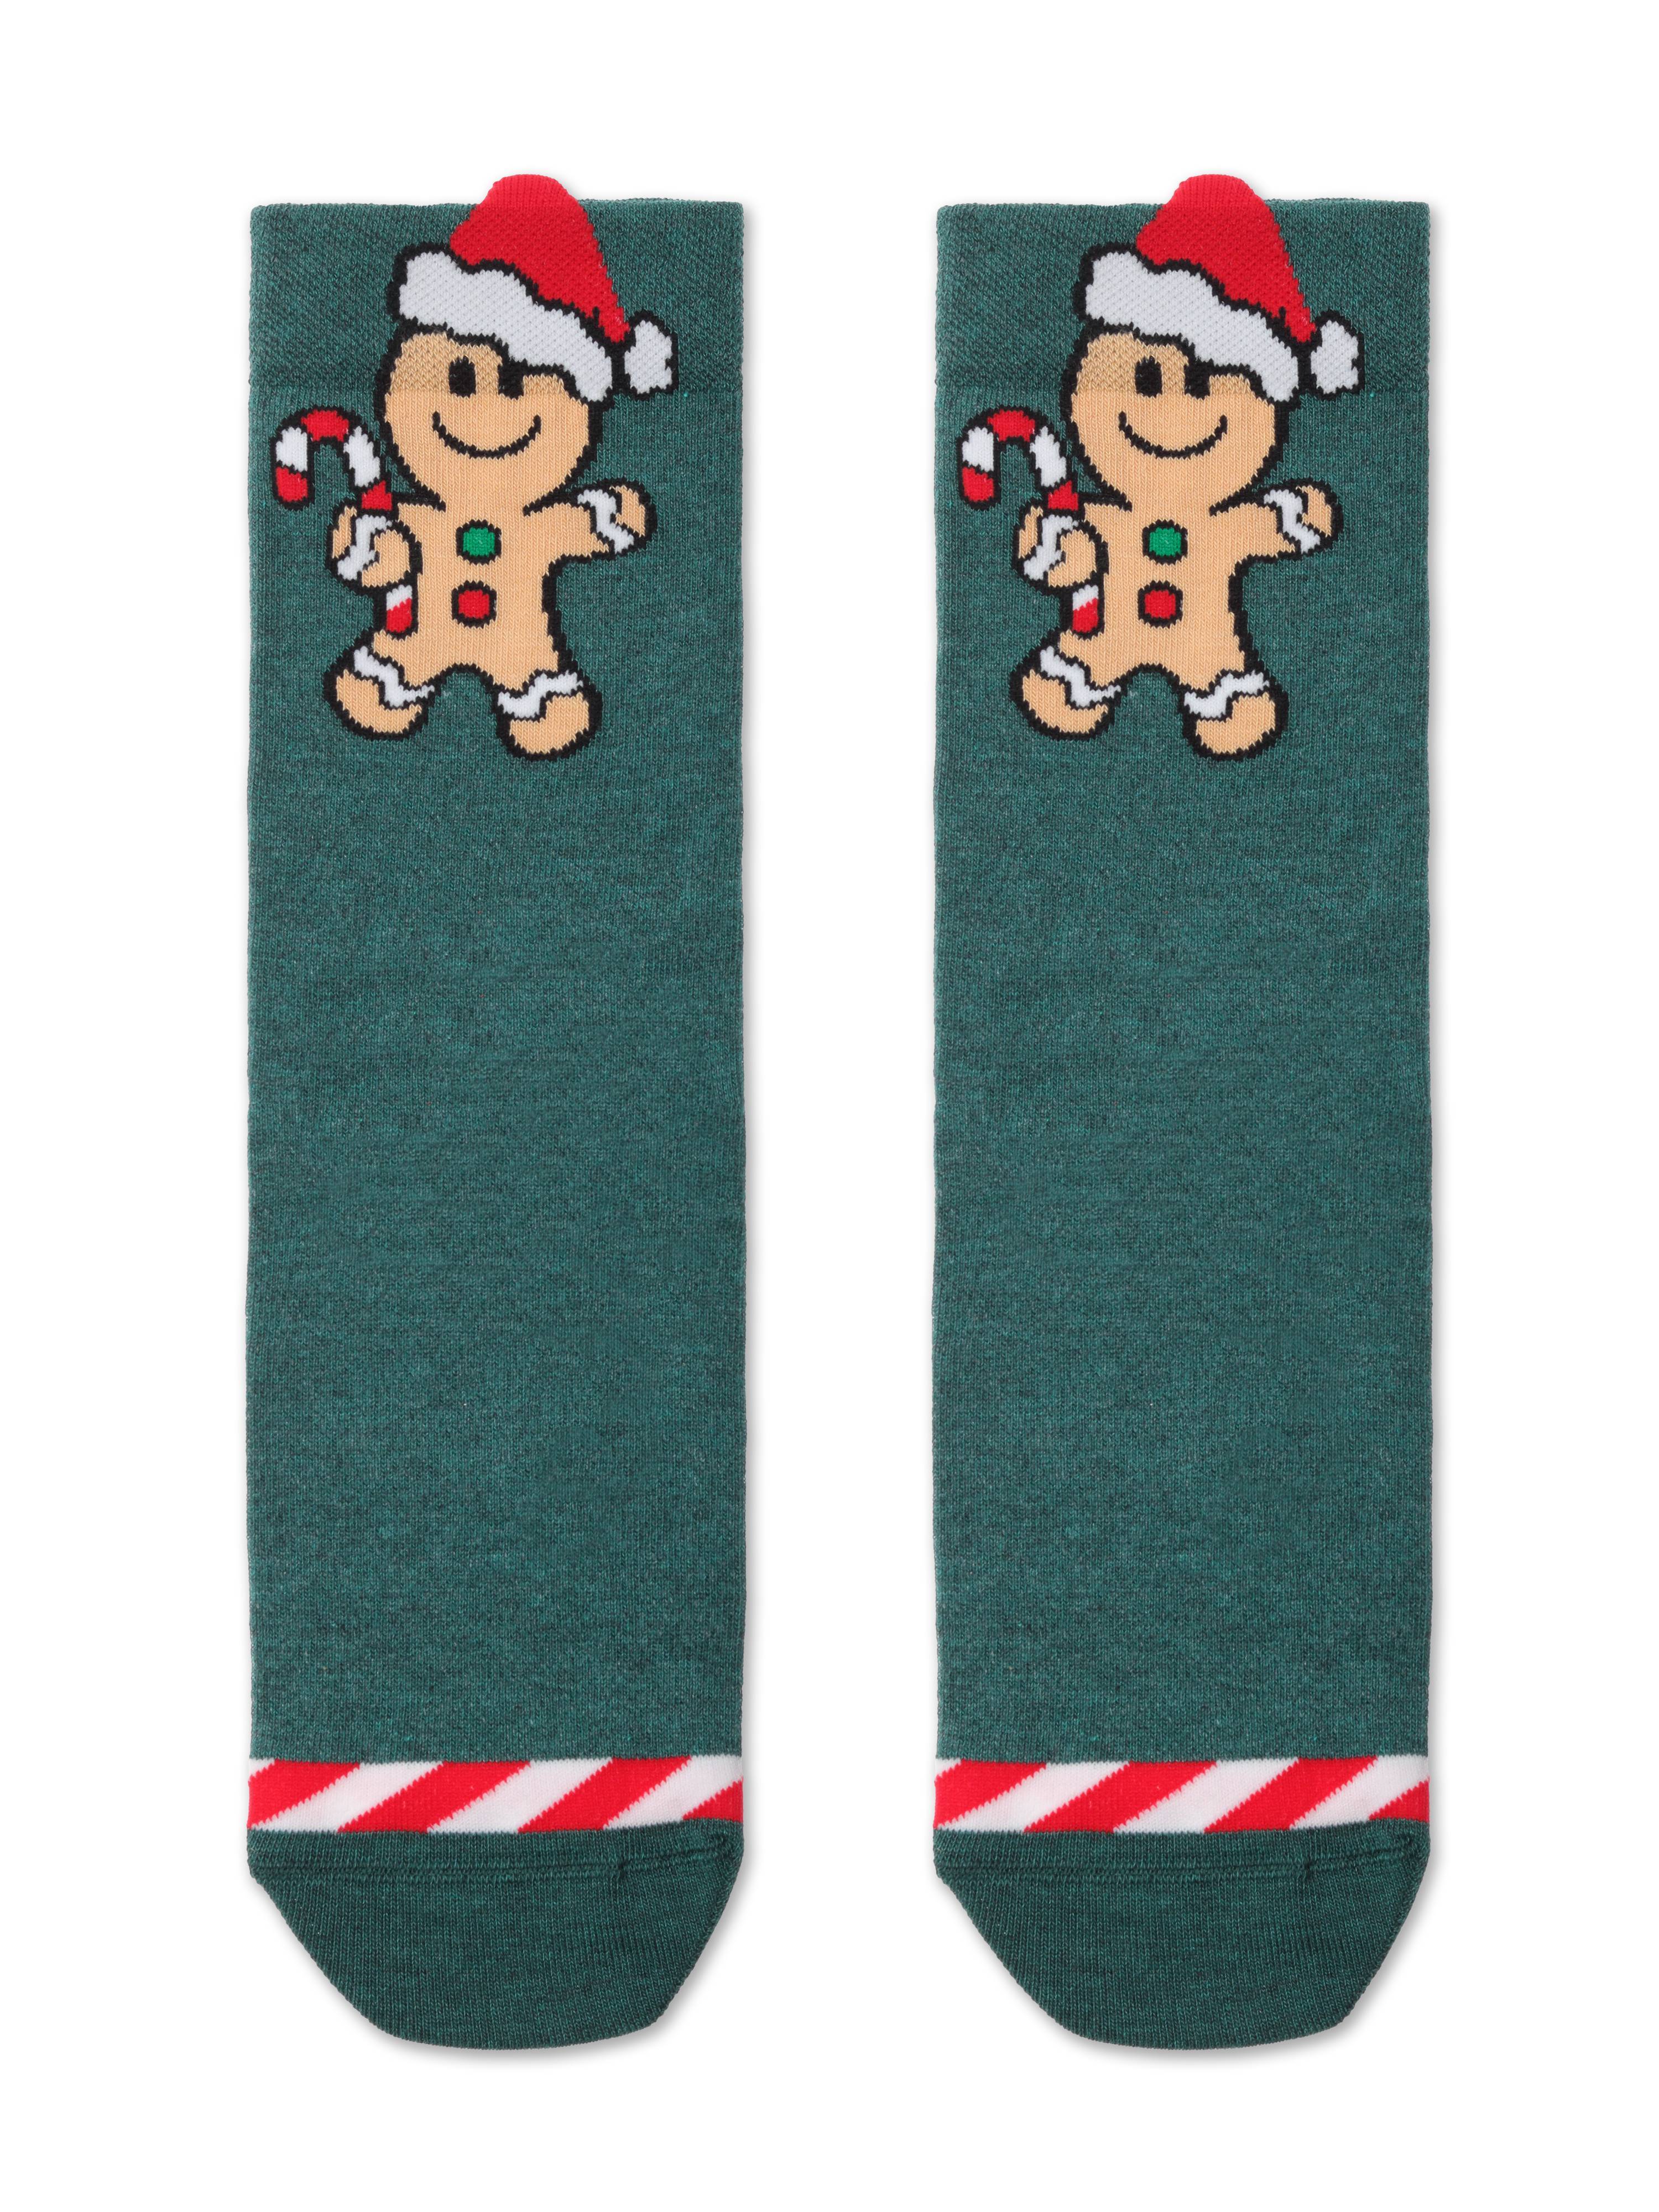 Новогодние носки «Biscuits» Conte ⭐️, цвет темно-бирюзовый, размер 42-45